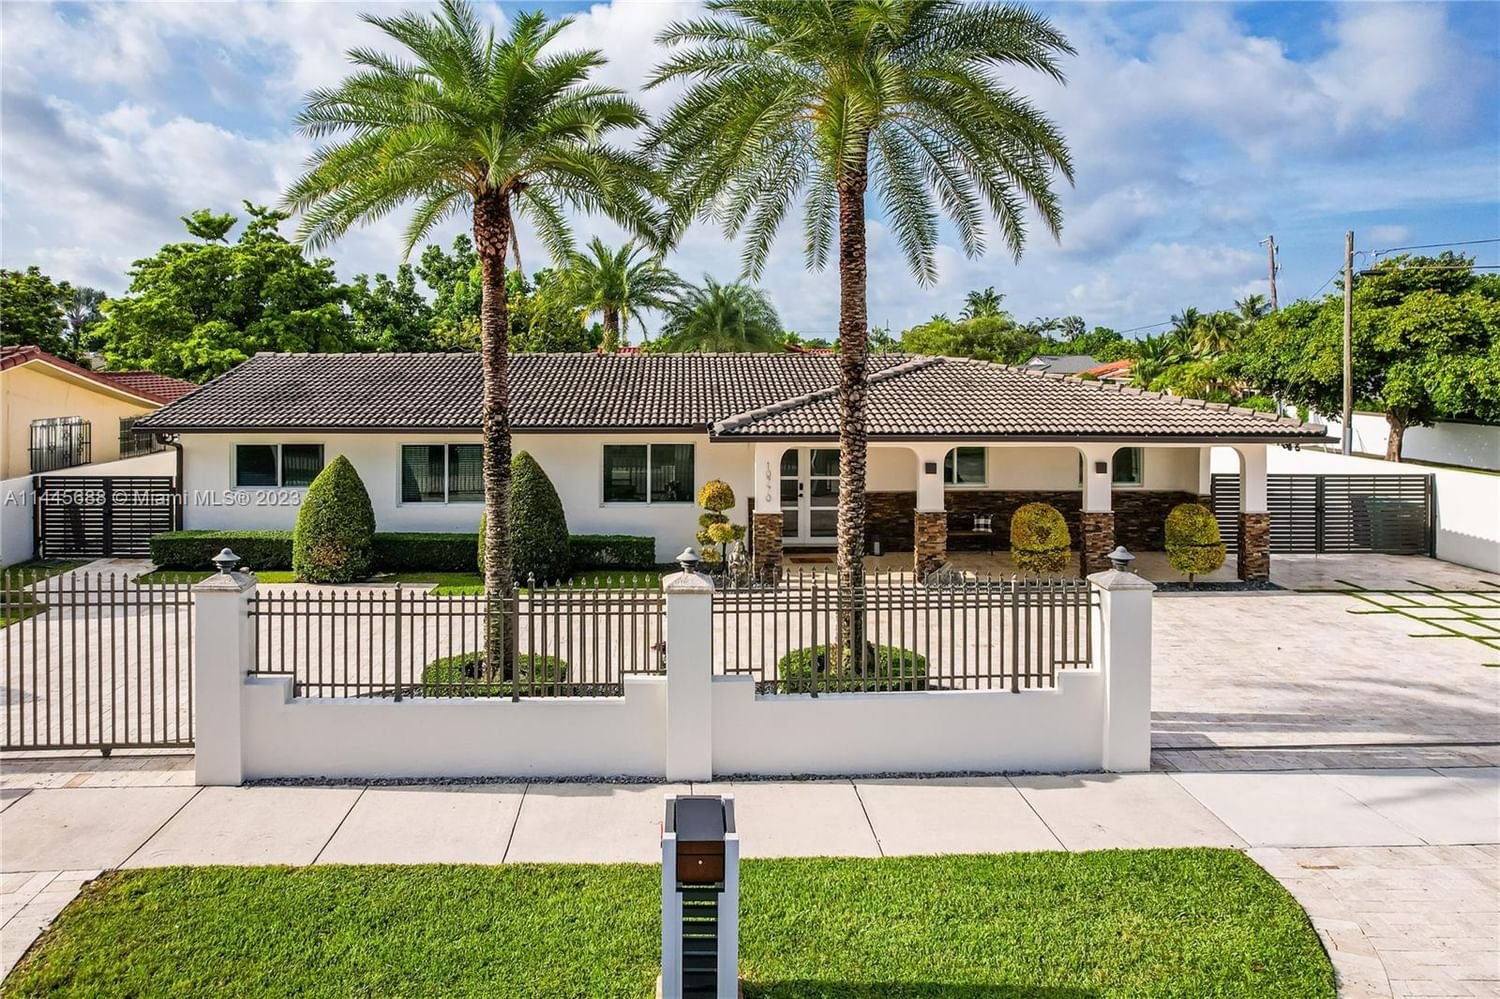 Real estate property located at 10770 30th St, Miami-Dade County, Miami, FL